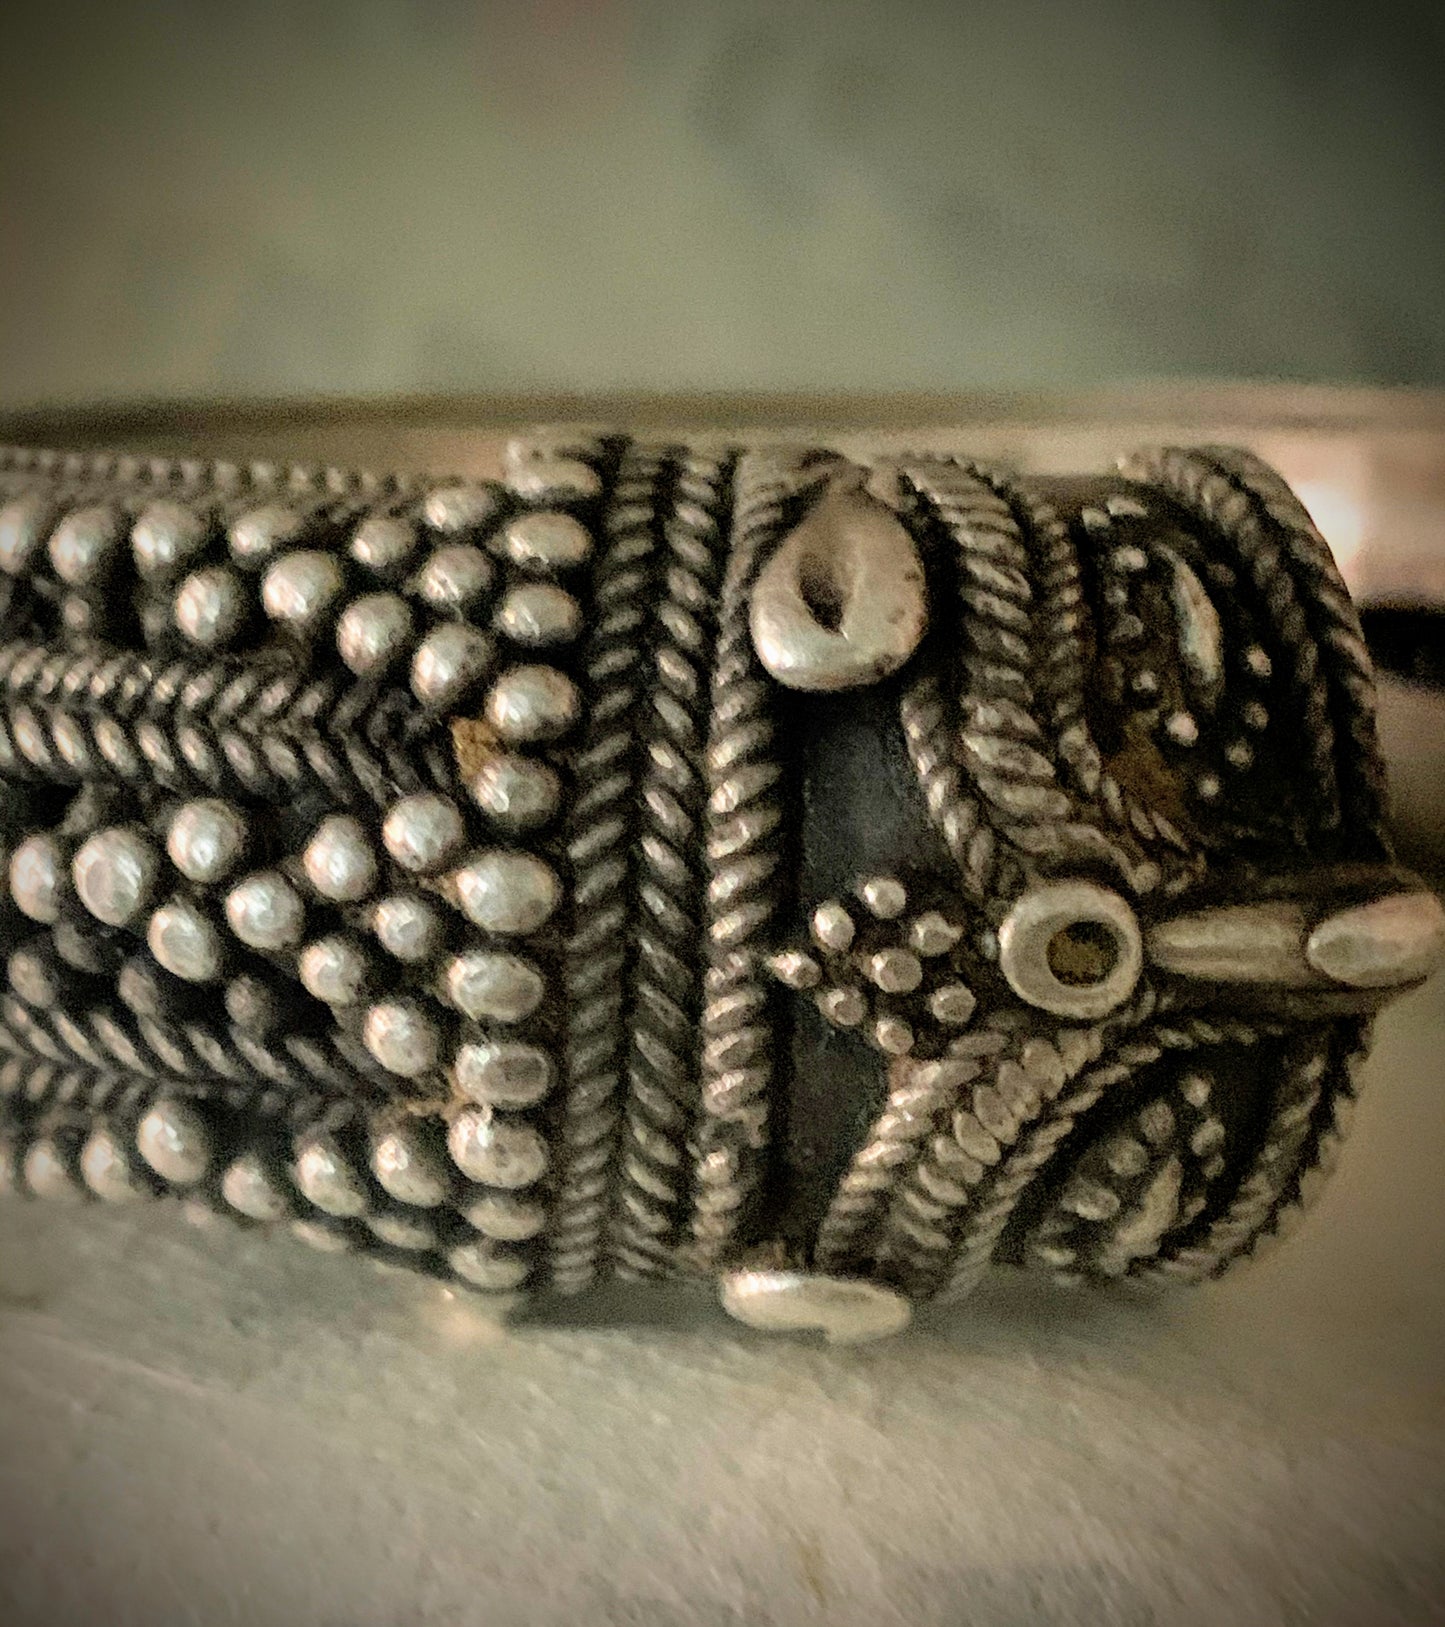 An antique Indian silver cuff bangle